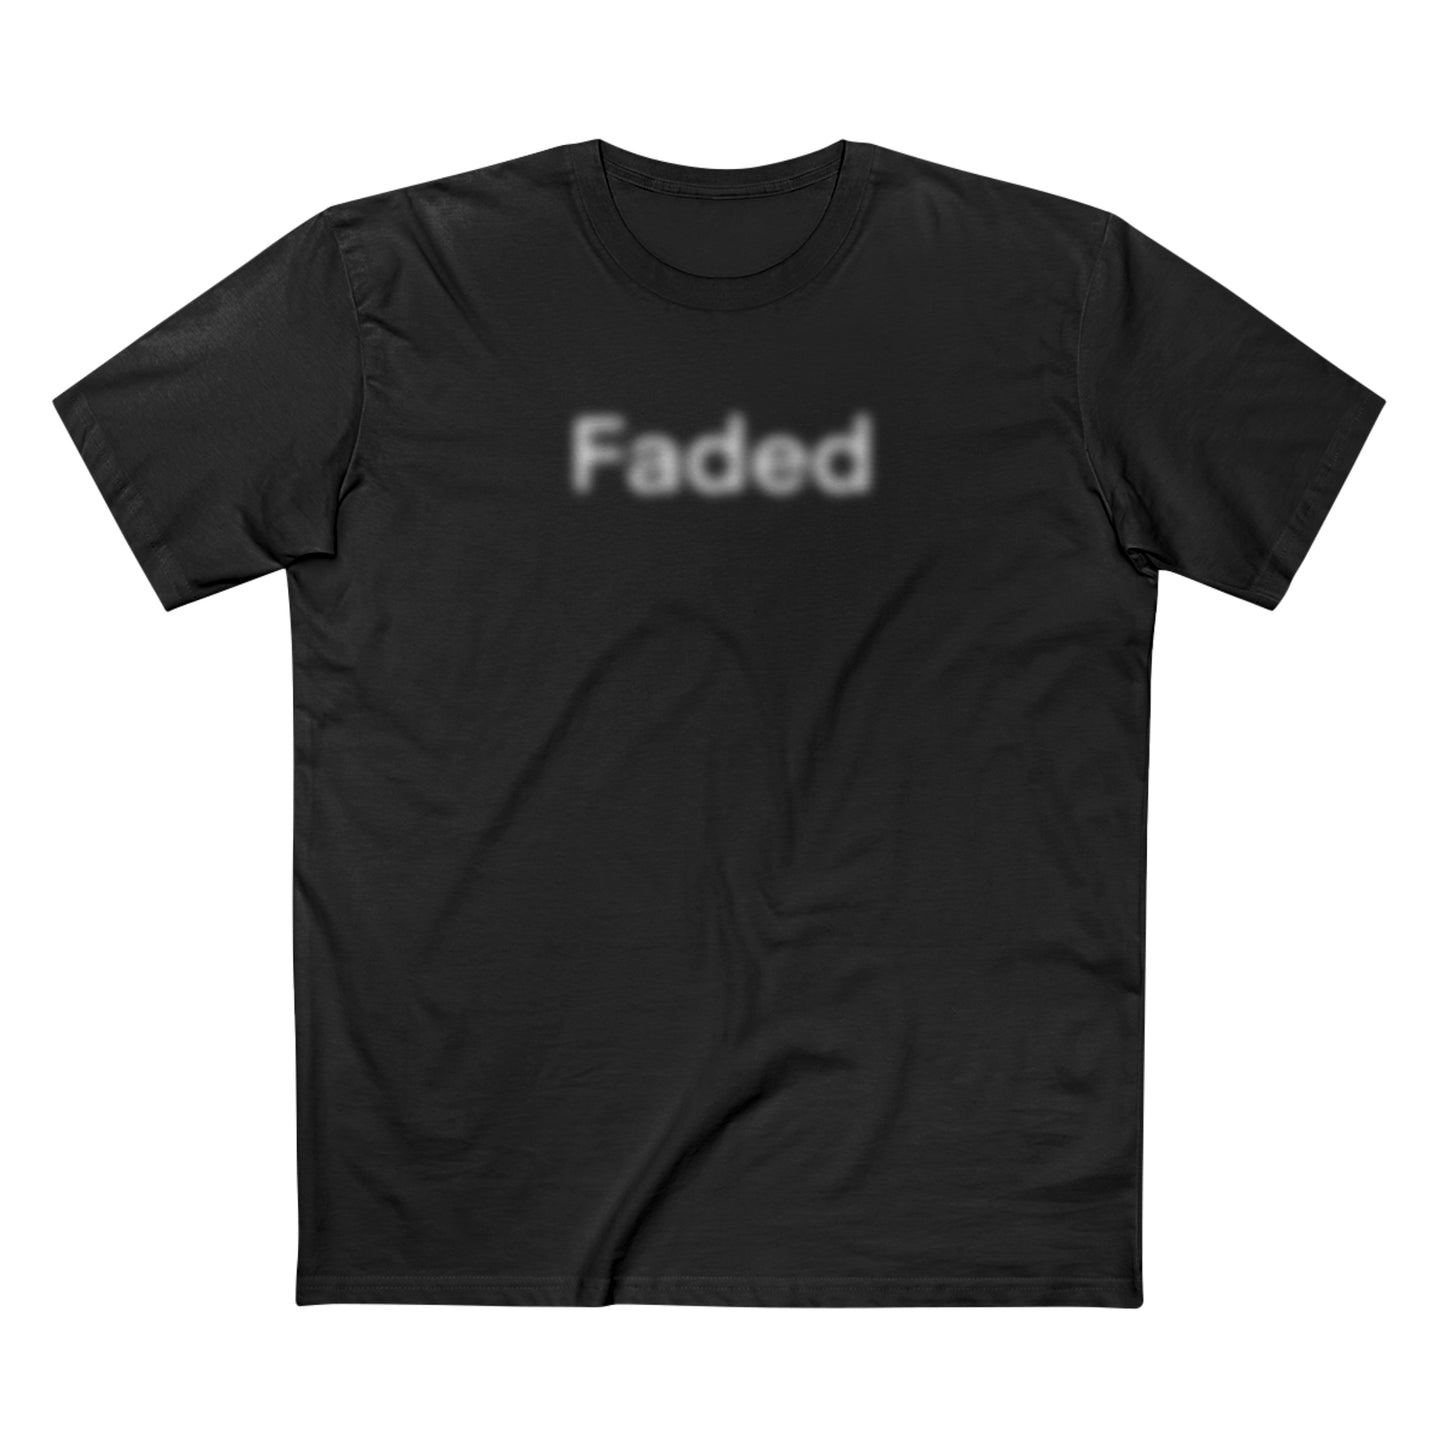 Faded Shirt